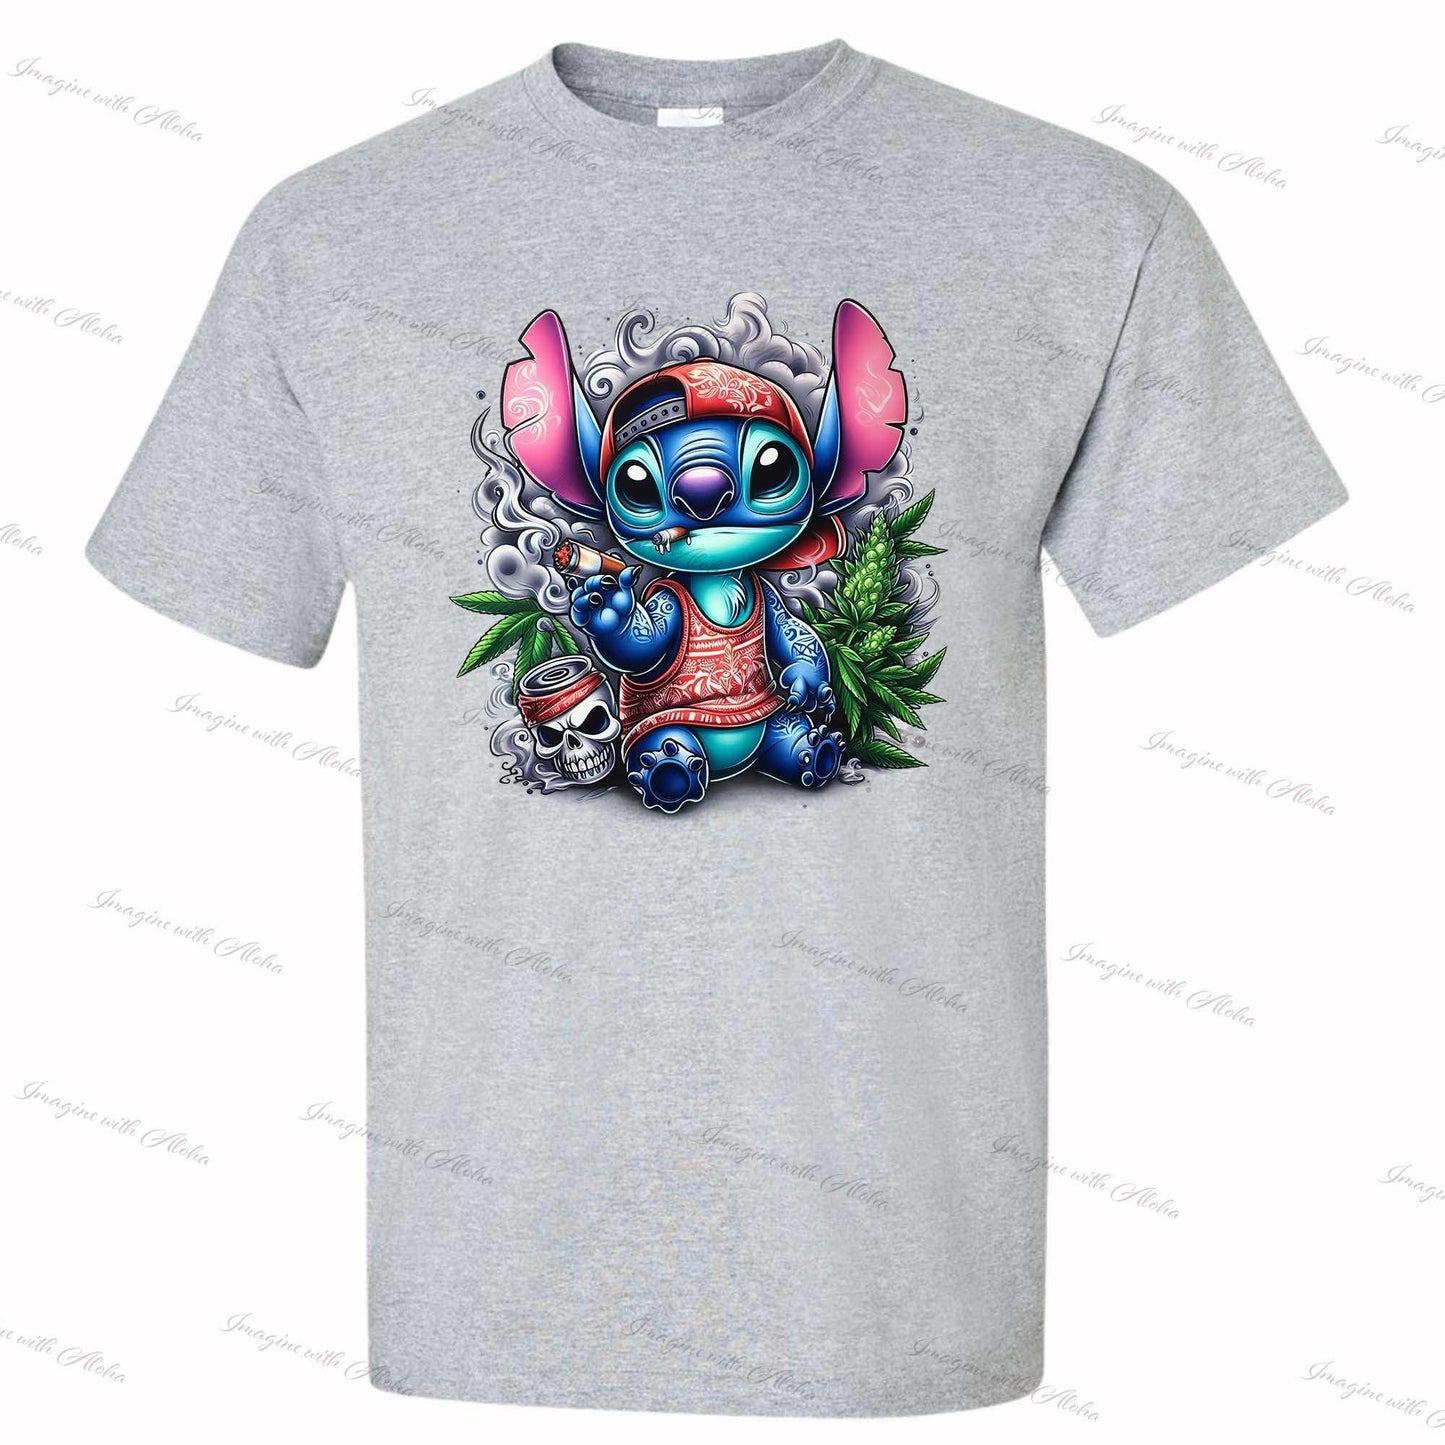 420 Carton T-Shirt, Cannabis Carton T-Shirt - Imagine With Aloha